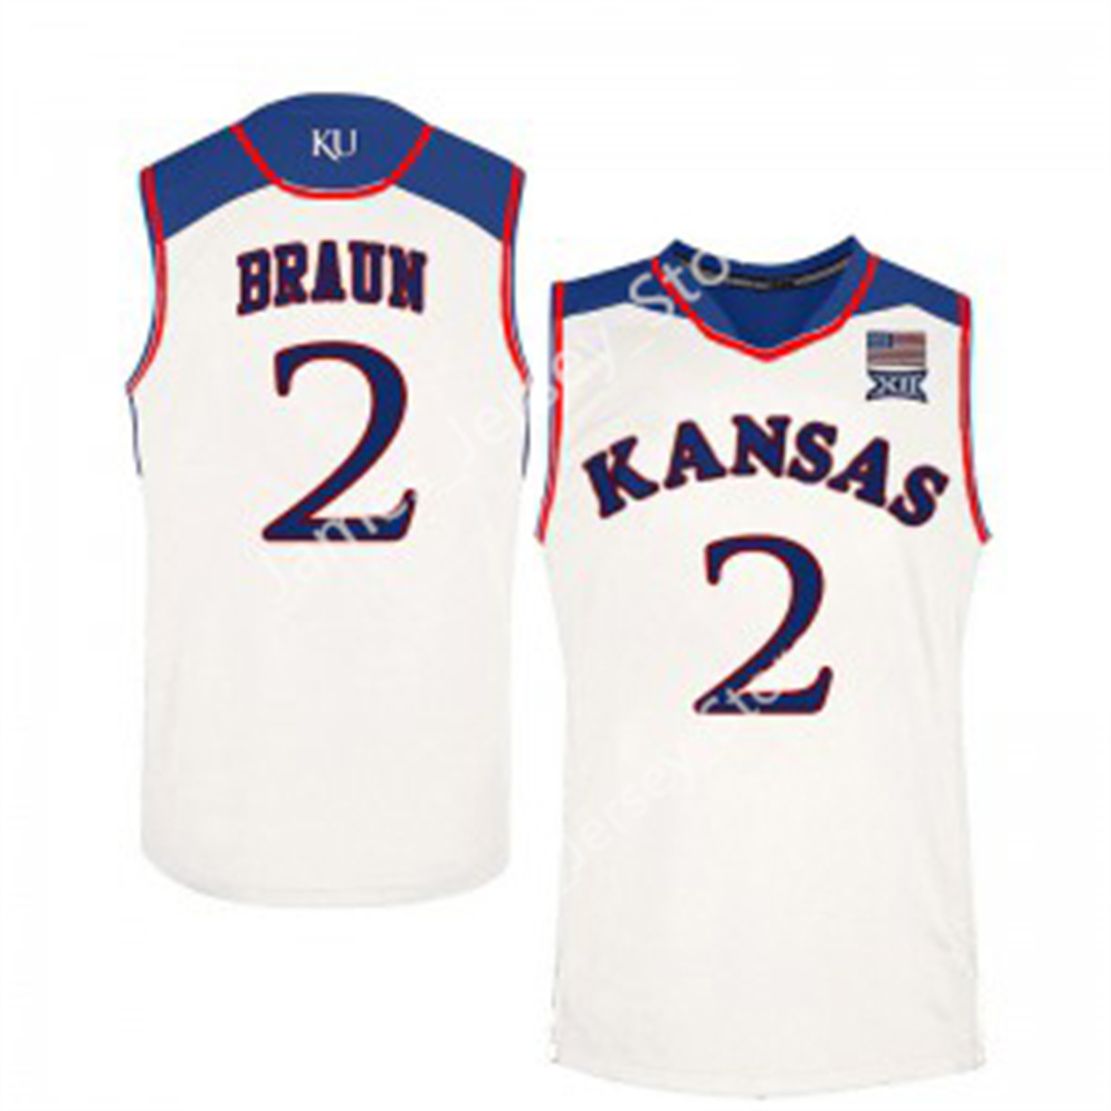 2 Christian Braun Basketball Jersey